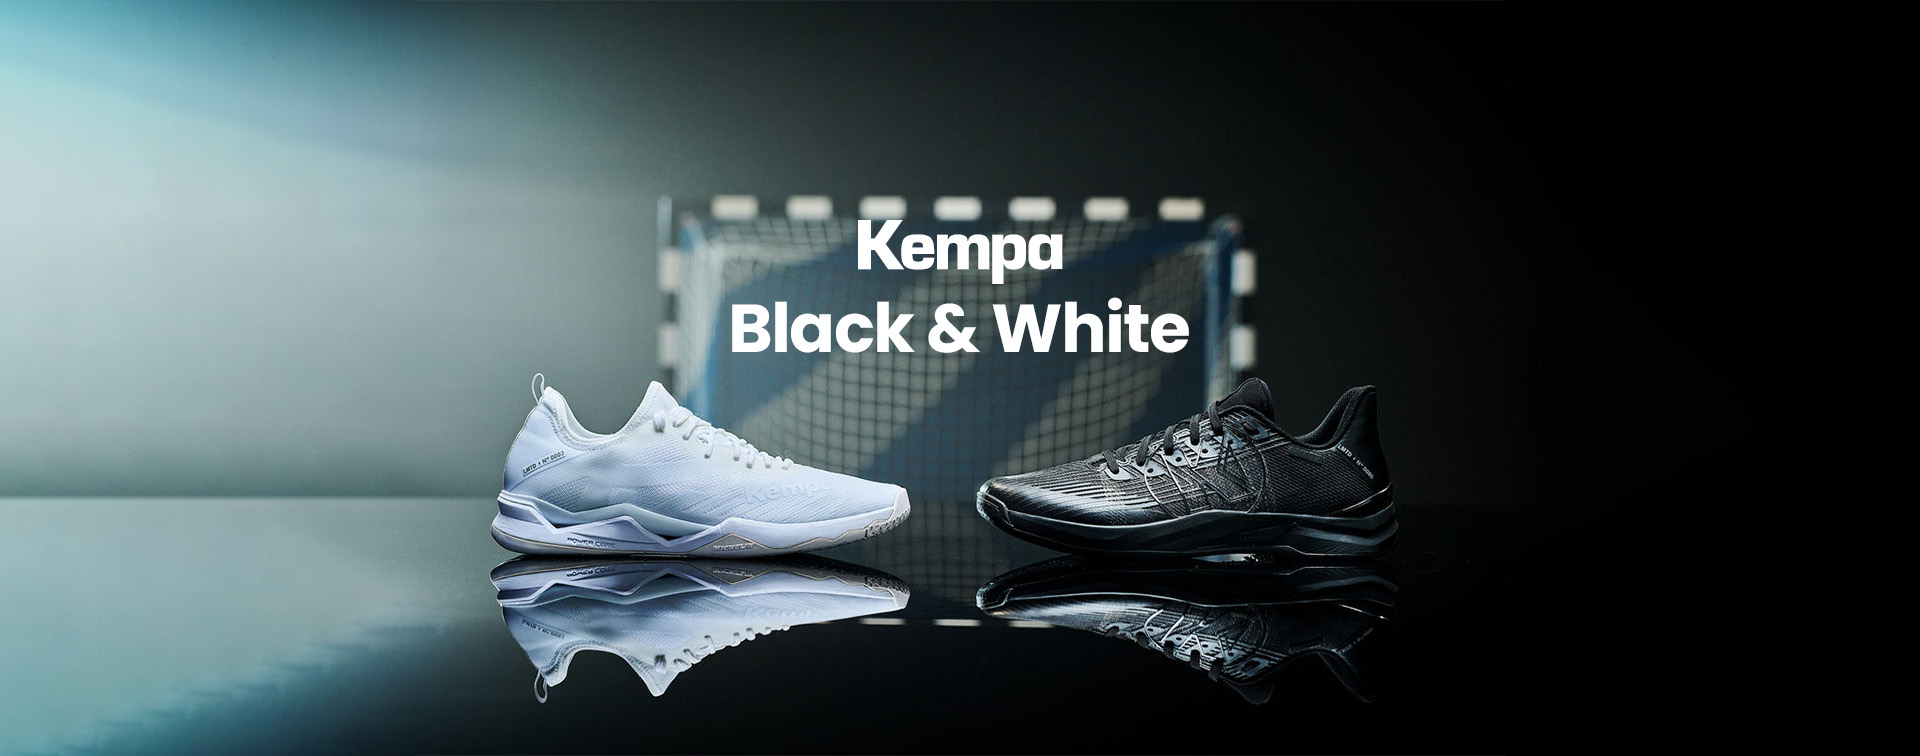 Kempa collection